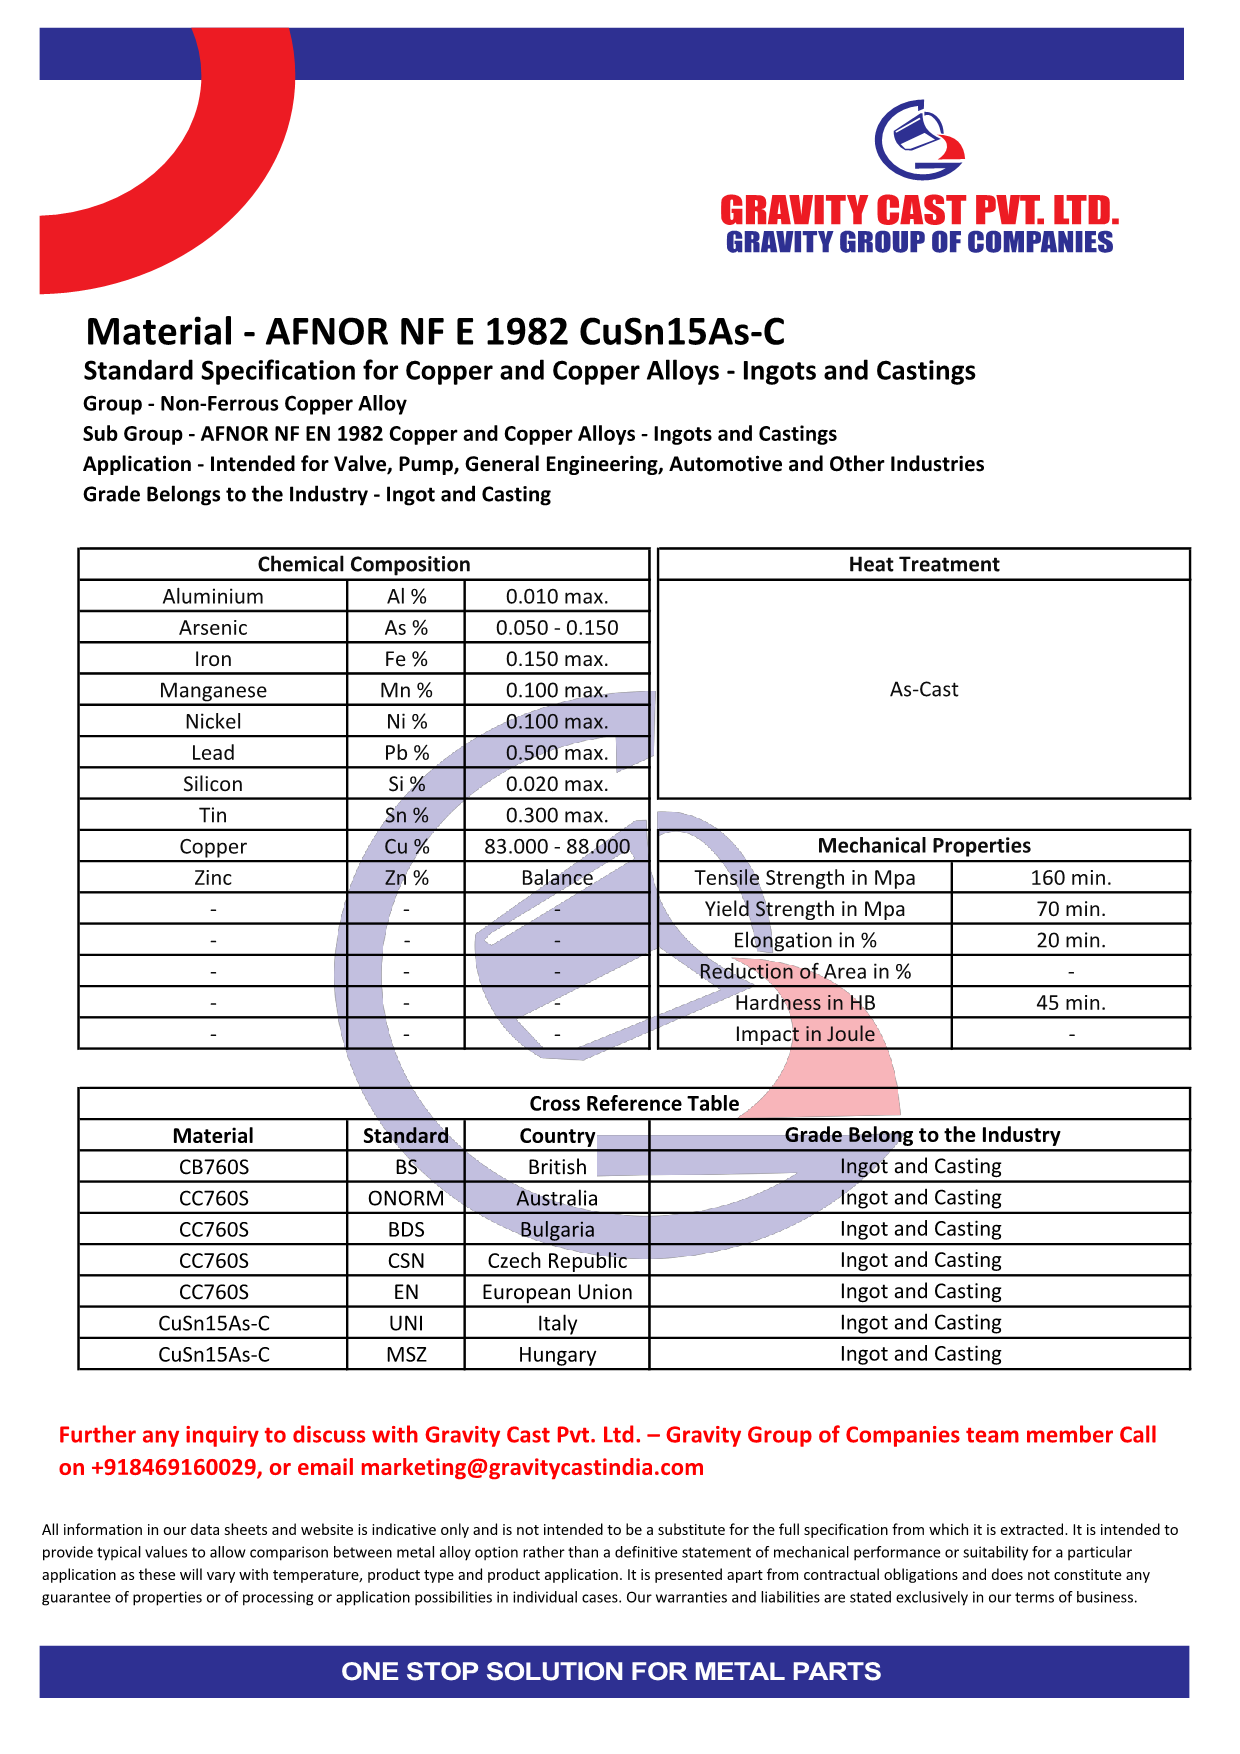 AFNOR NF E 1982 CuSn15As-C.pdf